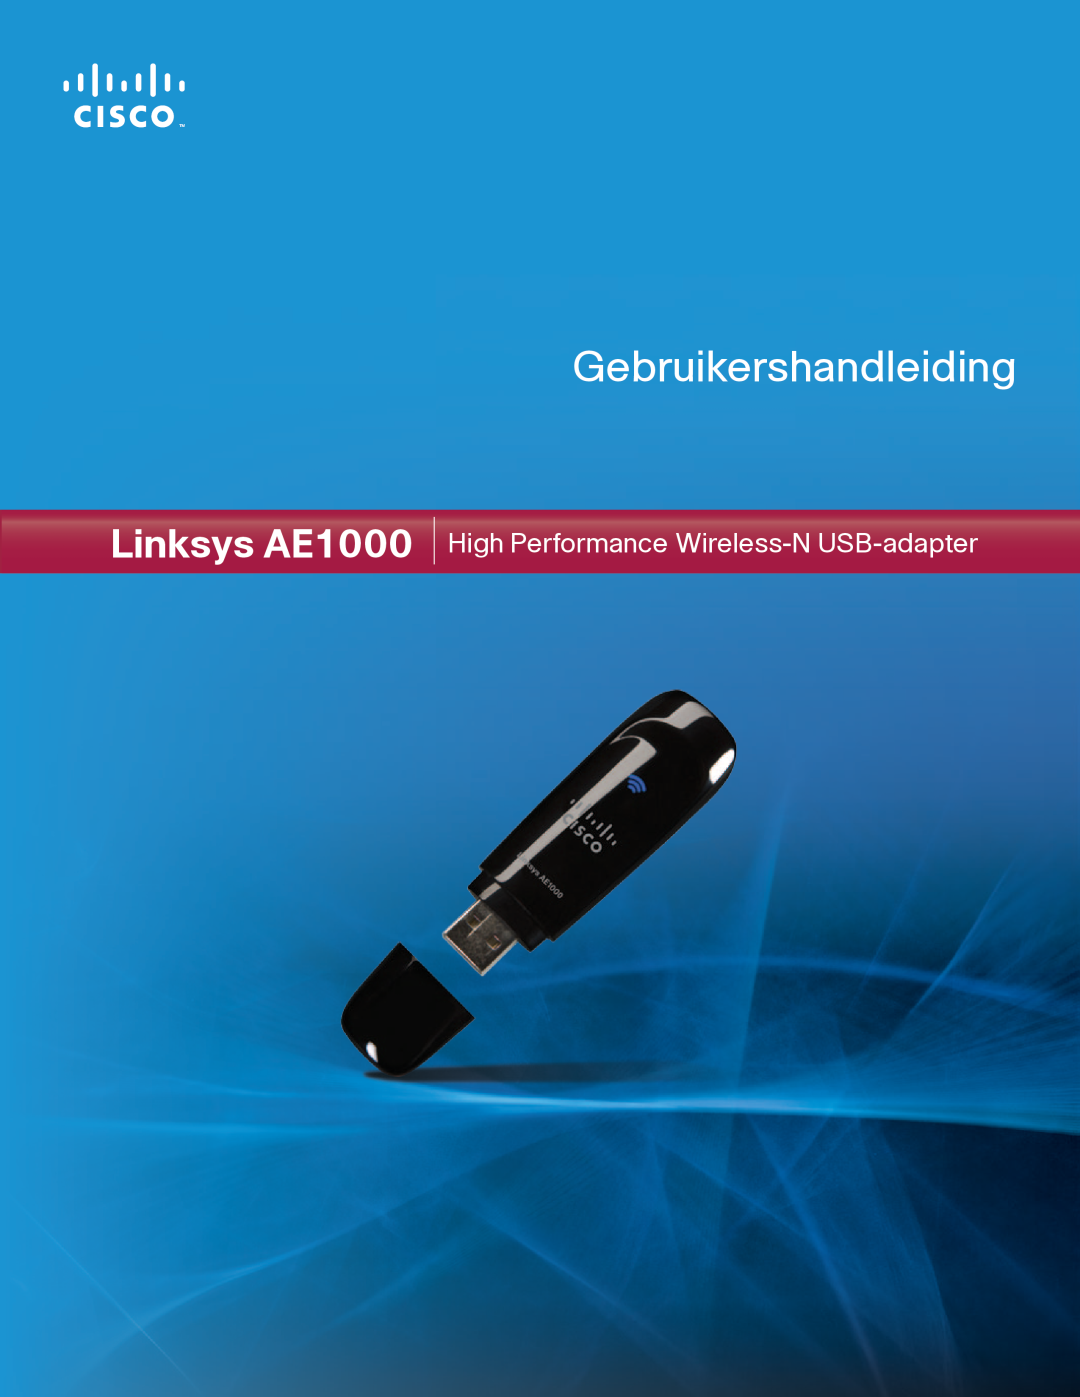 Cisco Systems manual Gebruikershandleiding, Linksys AE1000, High Performance Wireless-N USB-adapter 